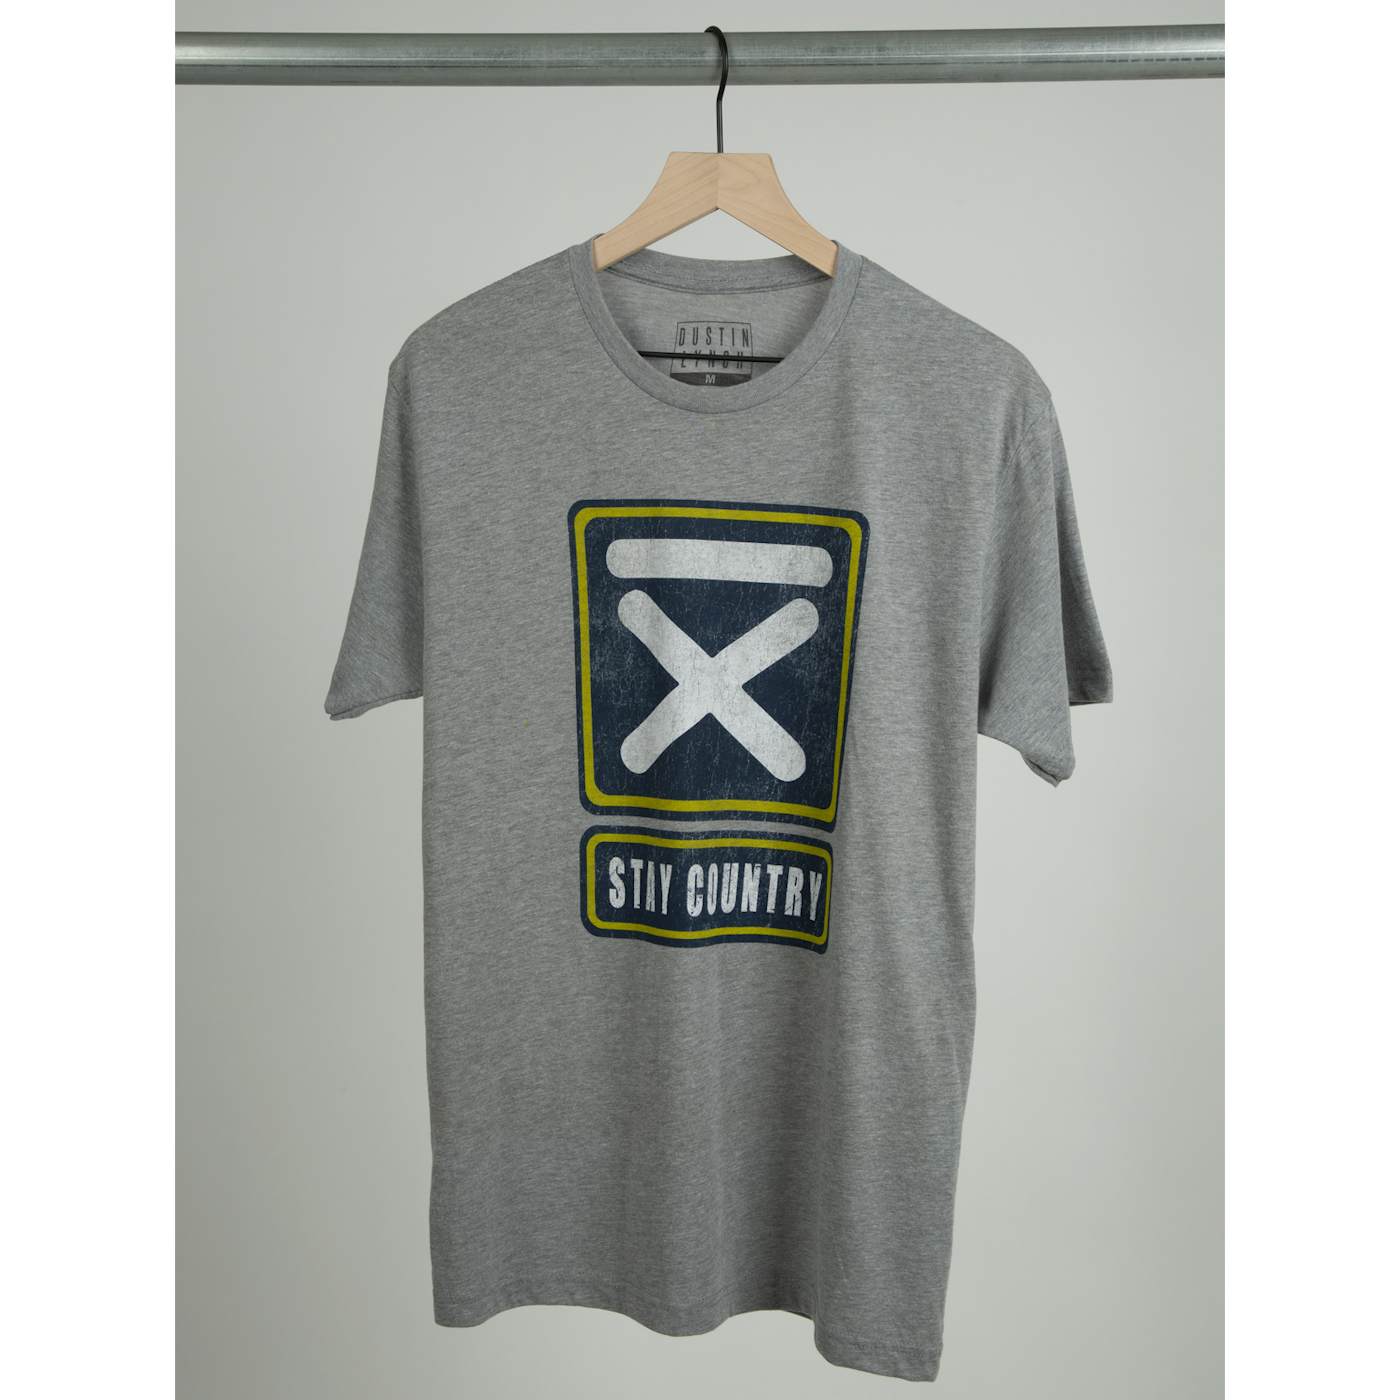 Dustin Lynch Grey Stay Country T-Shirt